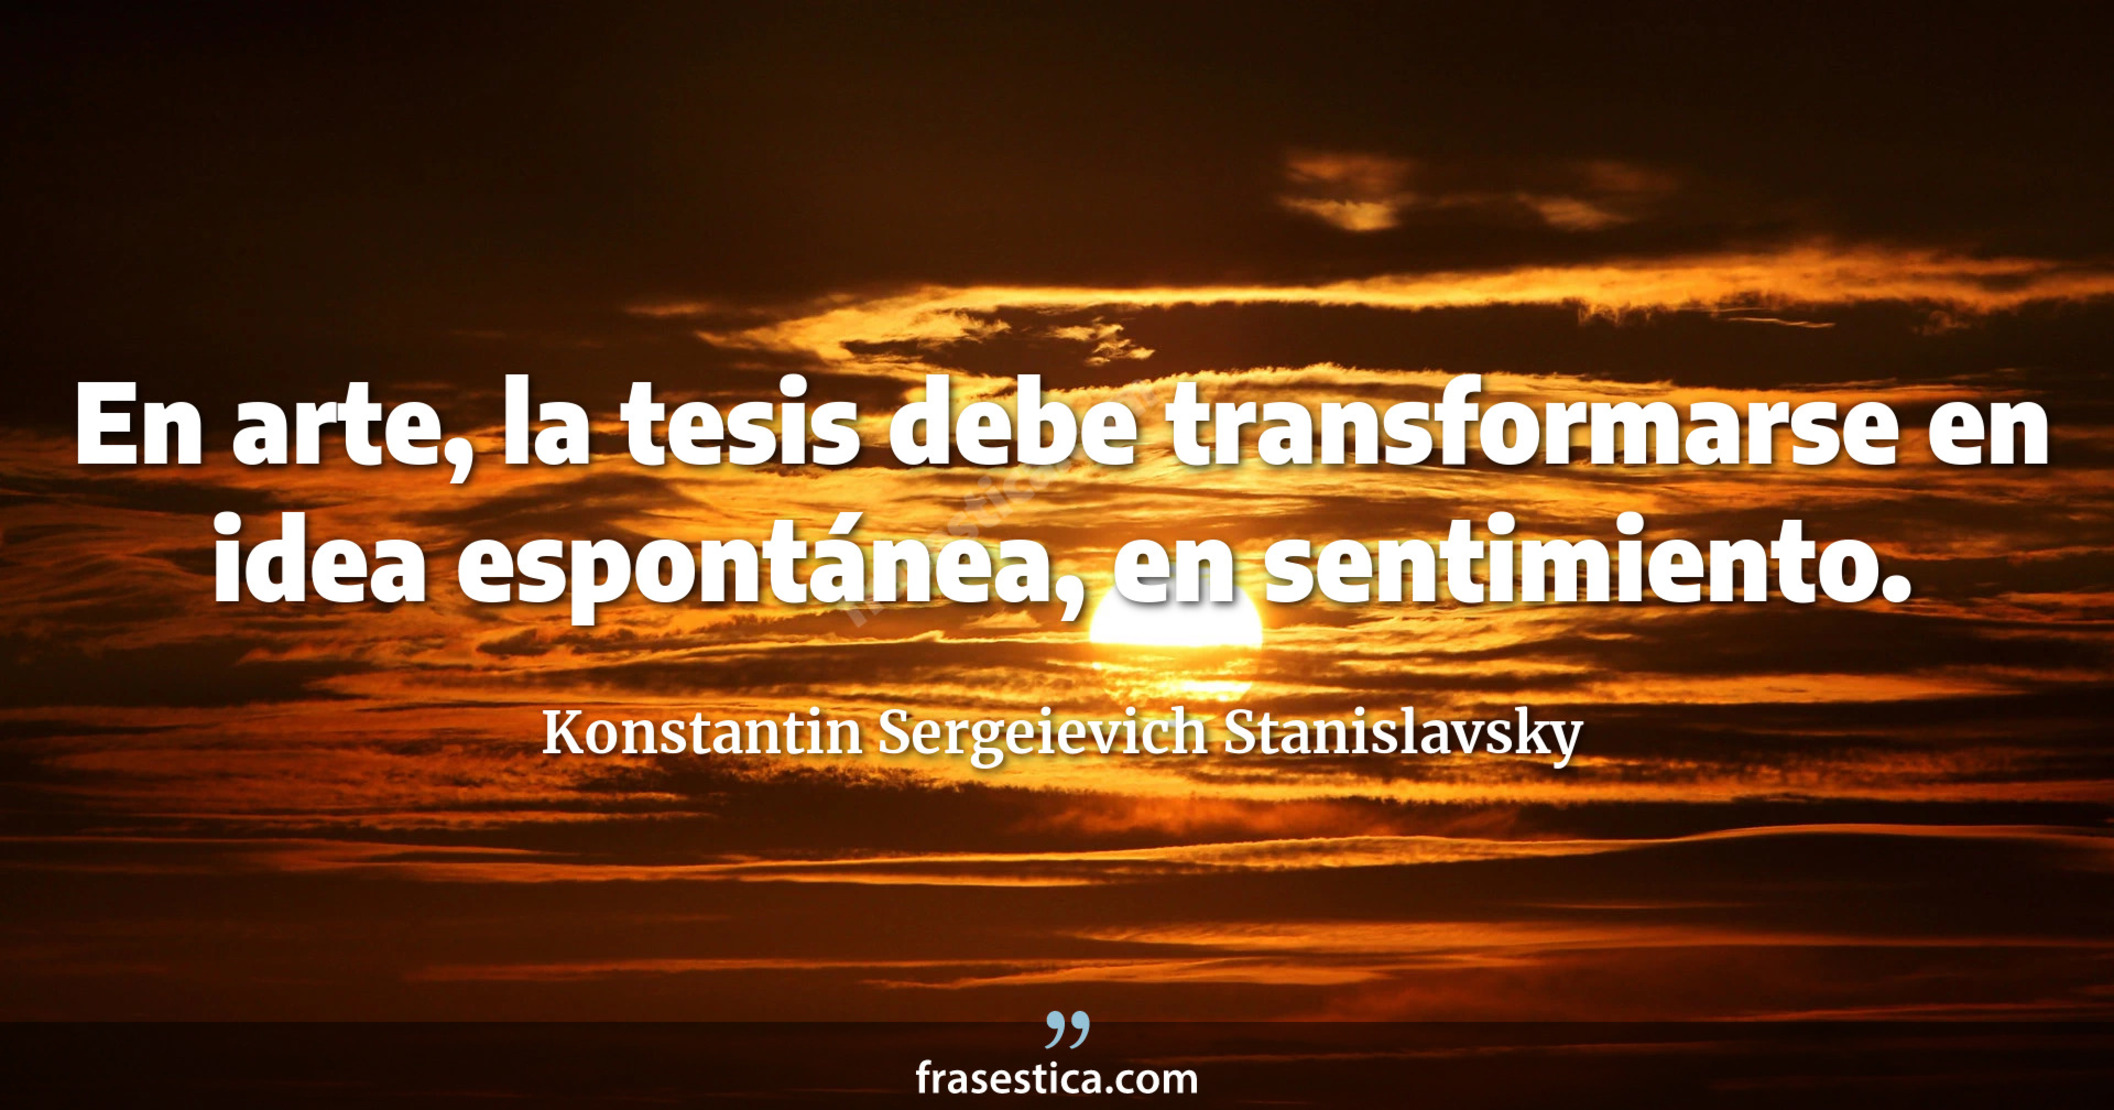 En arte, la tesis debe transformarse en idea espontánea, en sentimiento. - Konstantin Sergeievich Stanislavsky